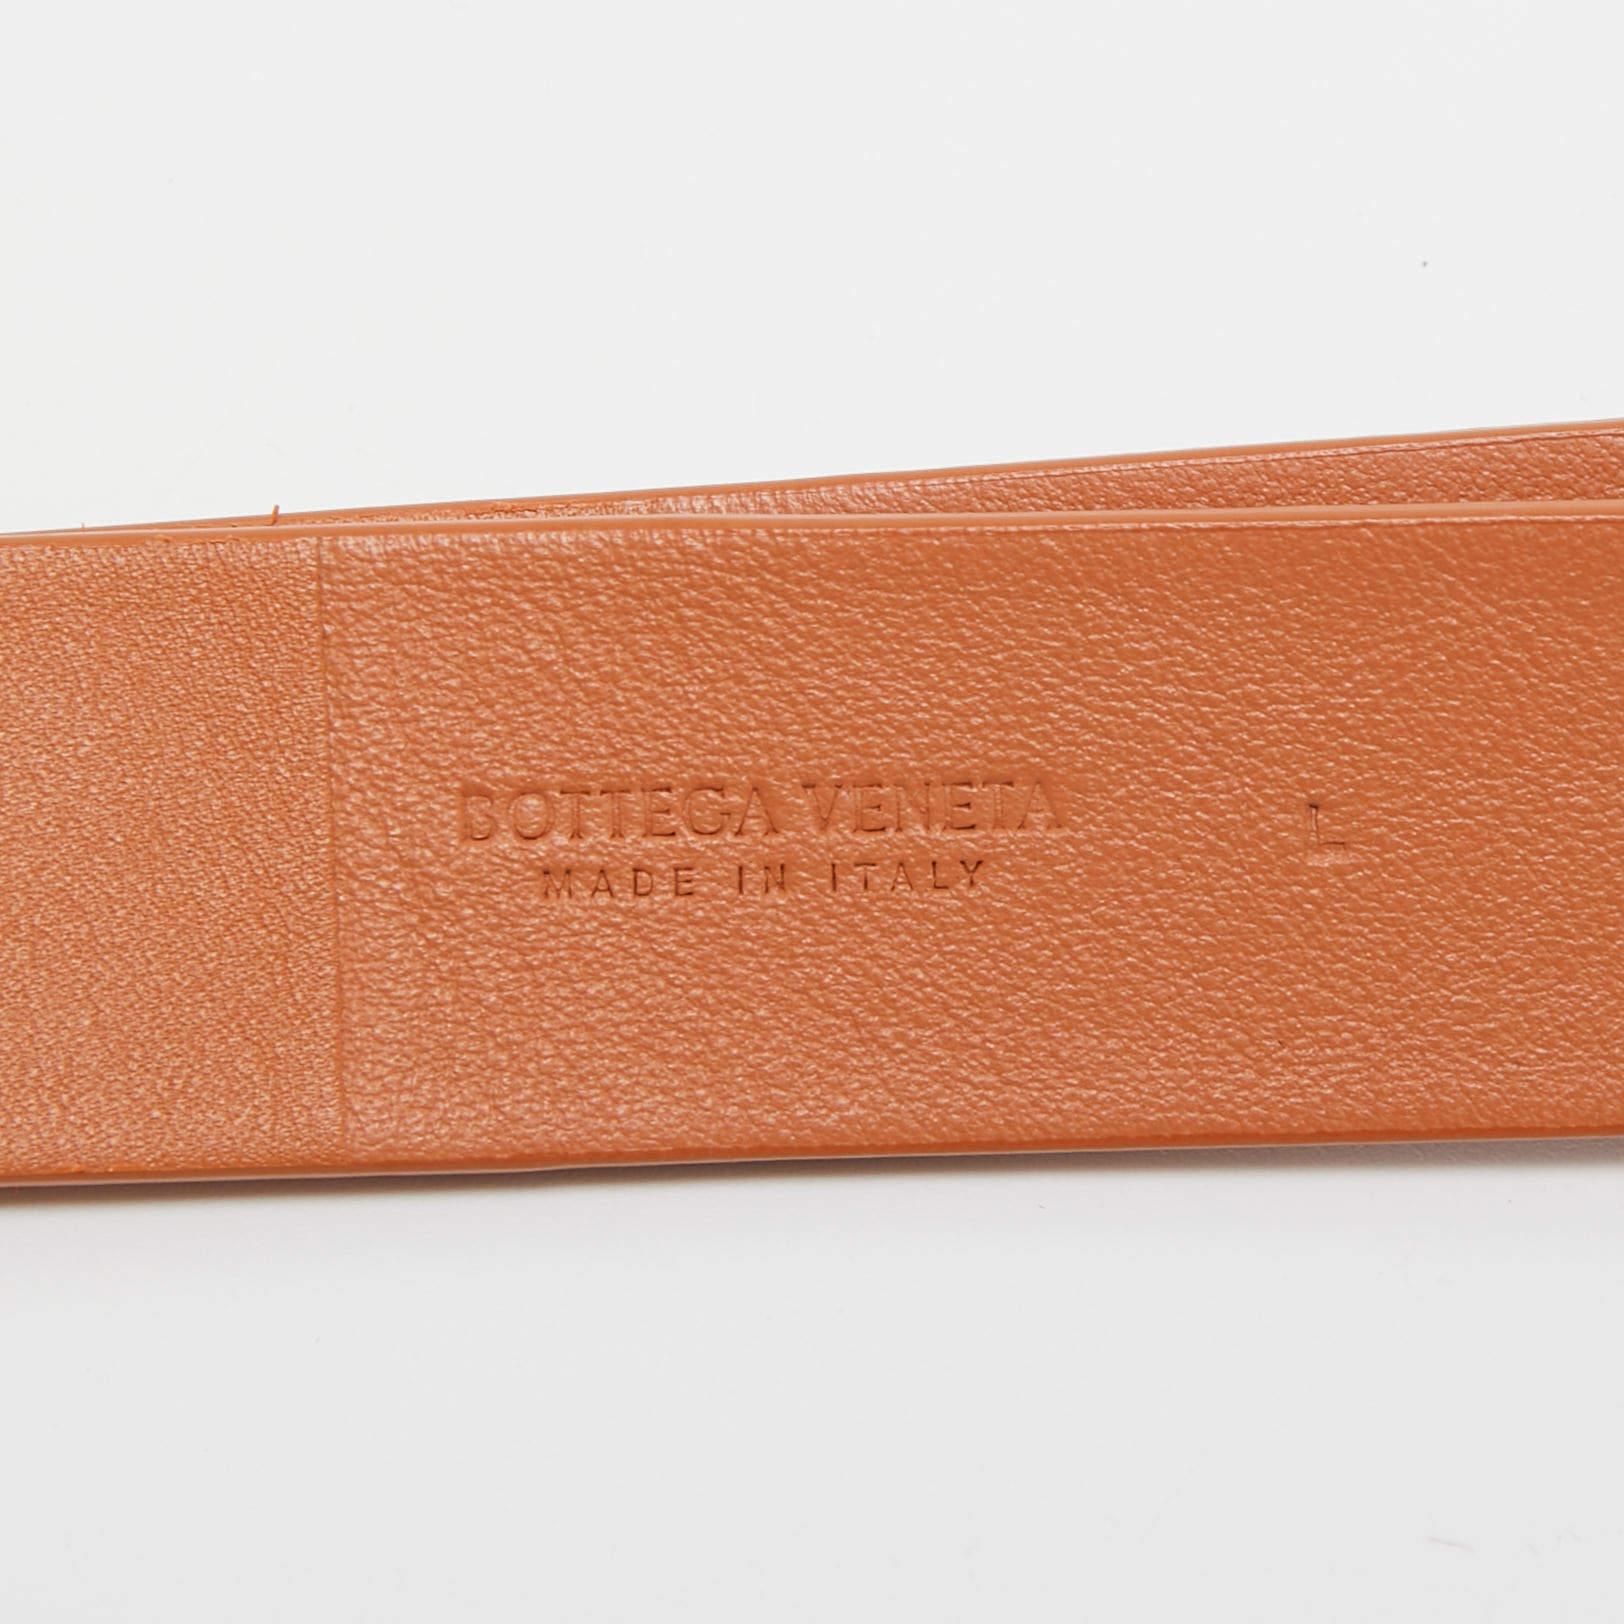 Bottega Veneta Tan Leather Double Strap Waist Belt L In Good Condition For Sale In Dubai, Al Qouz 2